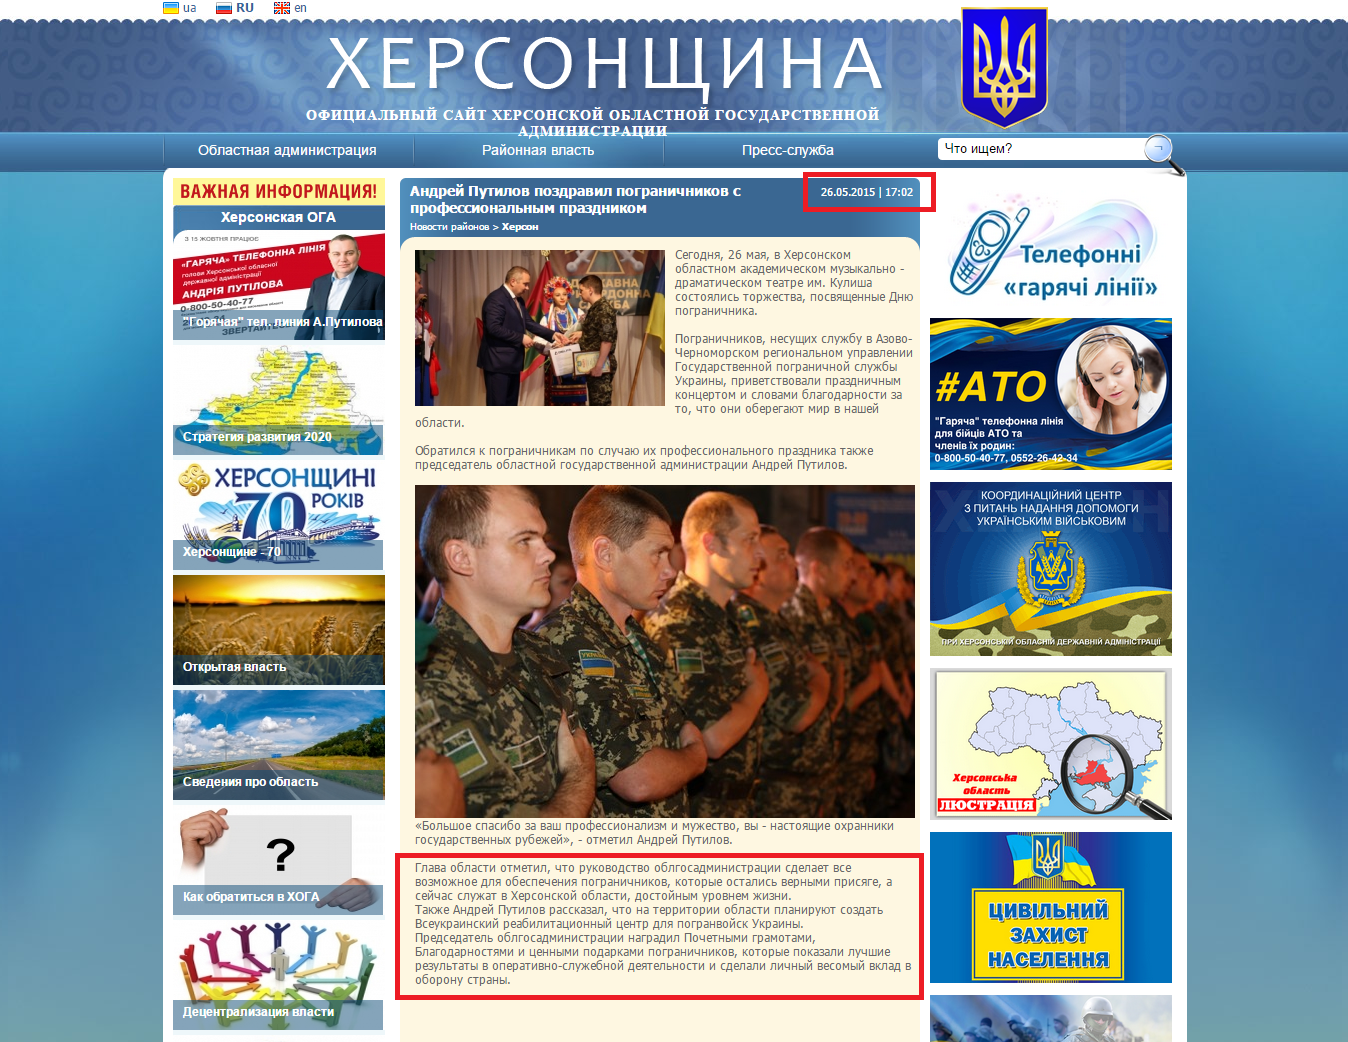 http://www.khoda.gov.ua/news/andrejj-putilov-pozdravil-pogranichnikov-s-professionalnym-prazdnikom